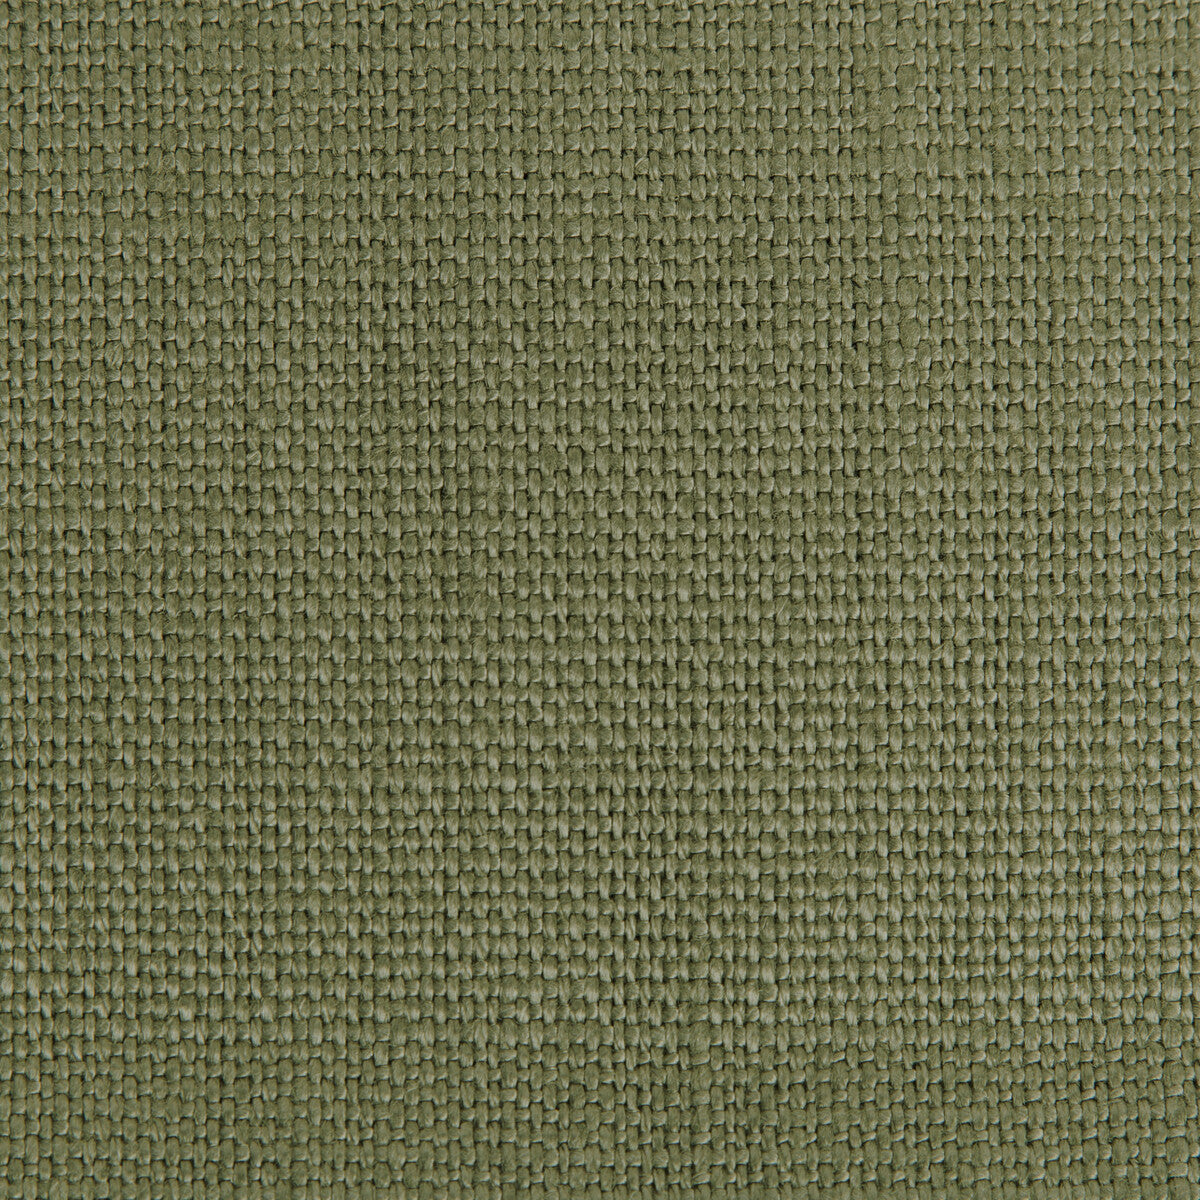 Stone Harbor fabric in spring green color - pattern 27591.3033.0 - by Kravet Basics